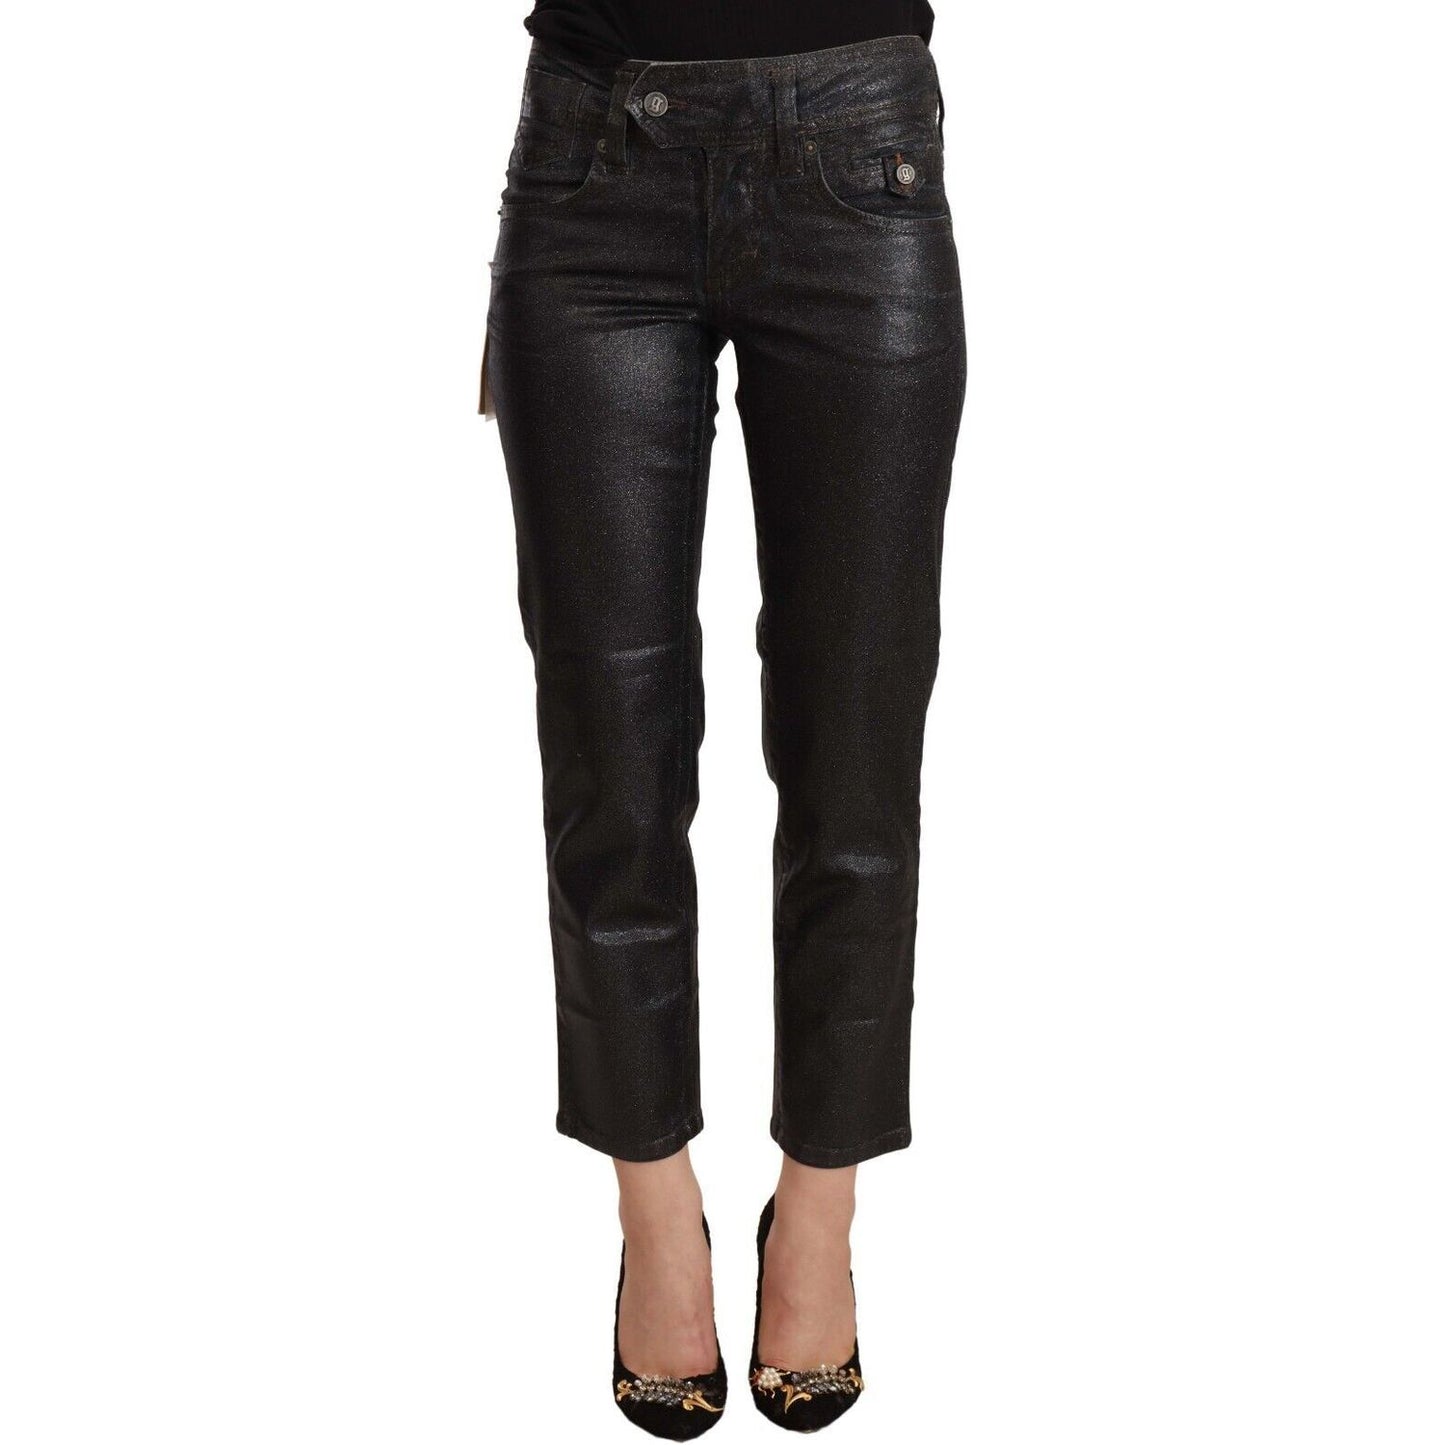 John Galliano Chic Black Glittered Cropped Pants black-glittered-mid-waist-cotton-cropped-pants s-l1600-12-3-39813b35-ae0.jpg